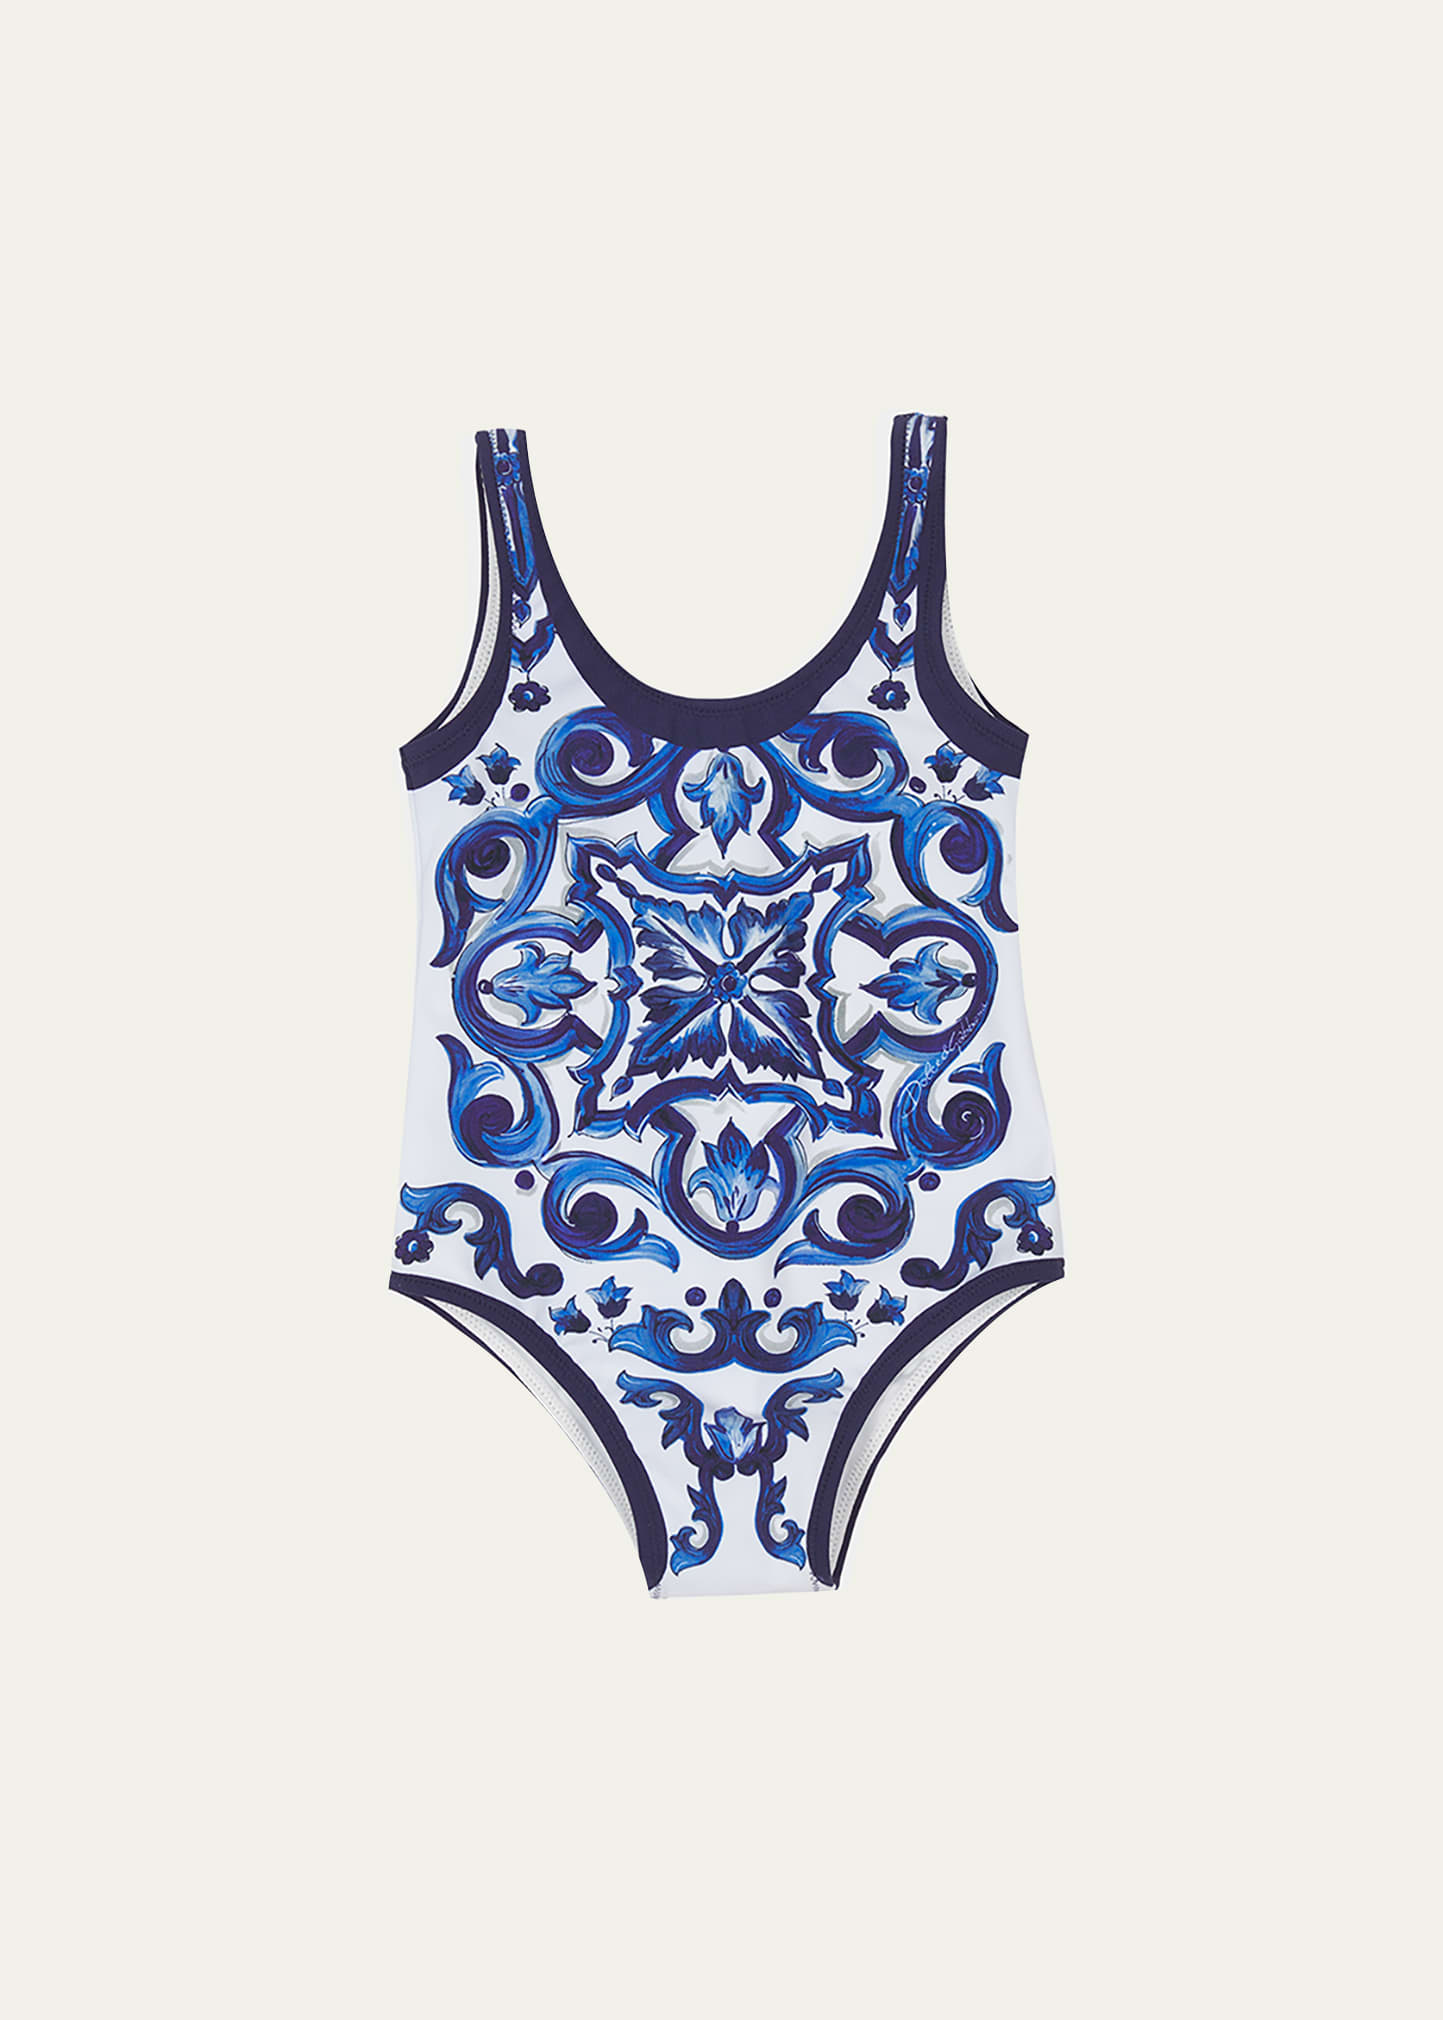 Dolce & Gabbana Junior Girl's Mediterraneo Majolica One-Piece Swimsuit, Size 3M-24M